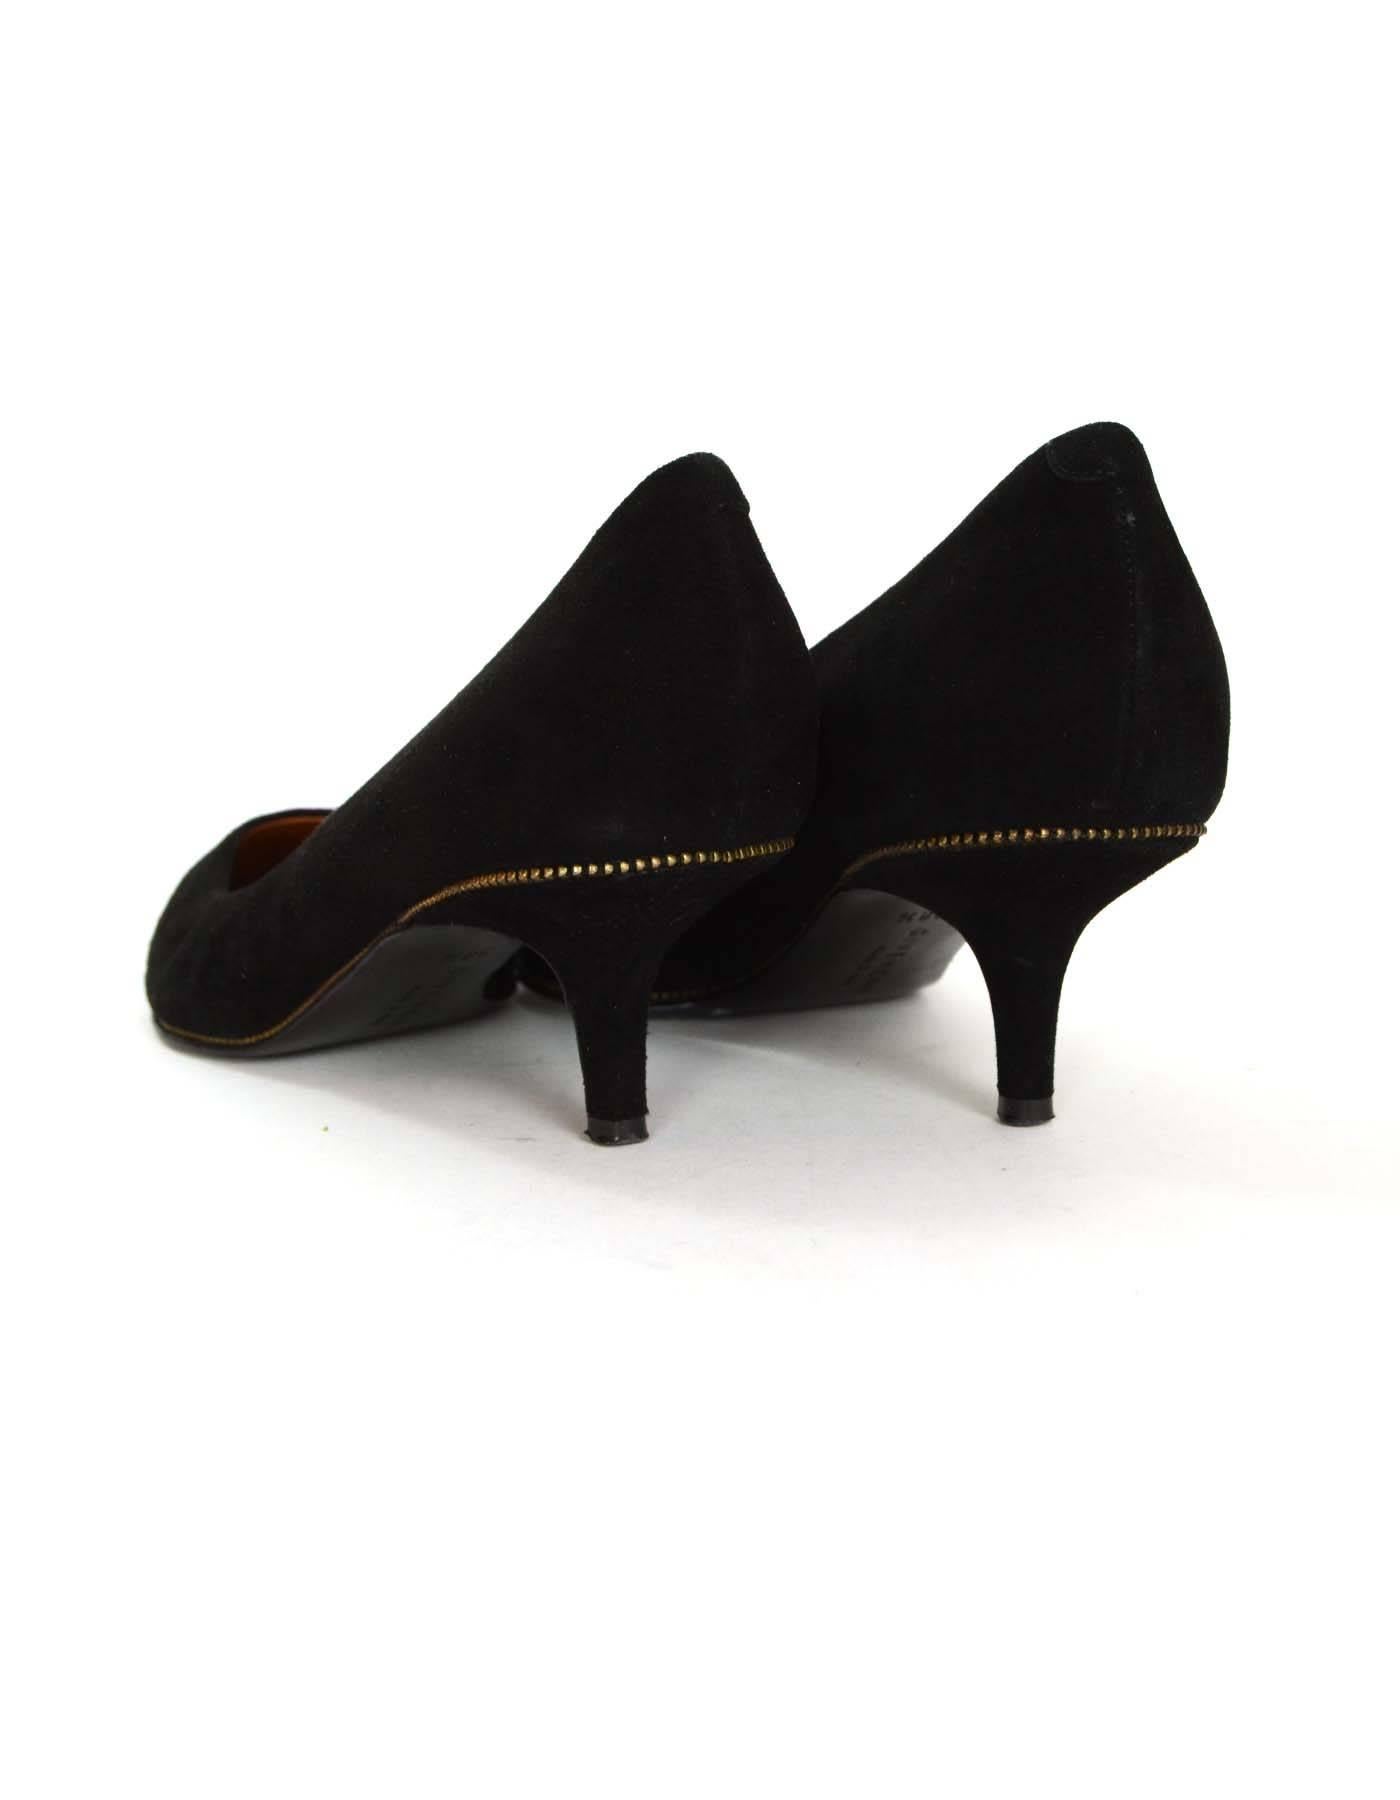 Givenchy Black Suede Kitten Heel Pumps sz 38.5 1